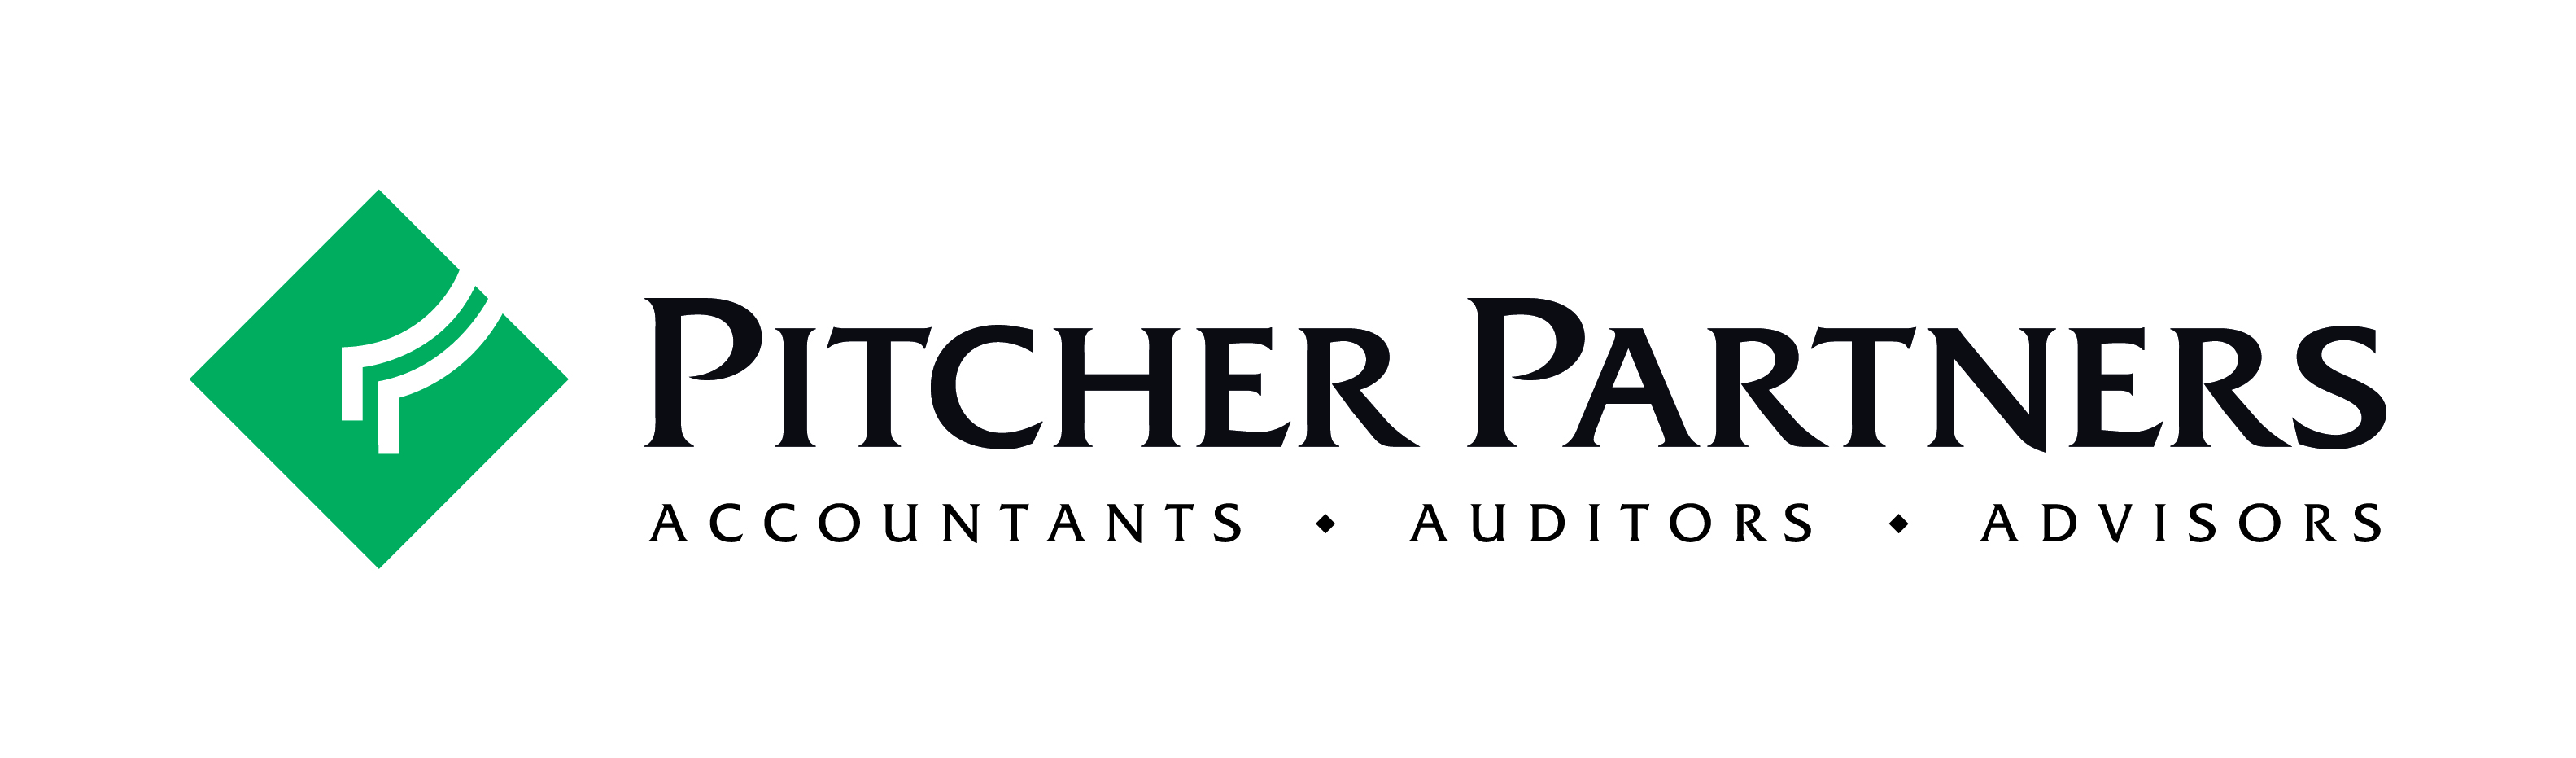 PitcherPartners Logo.jpg